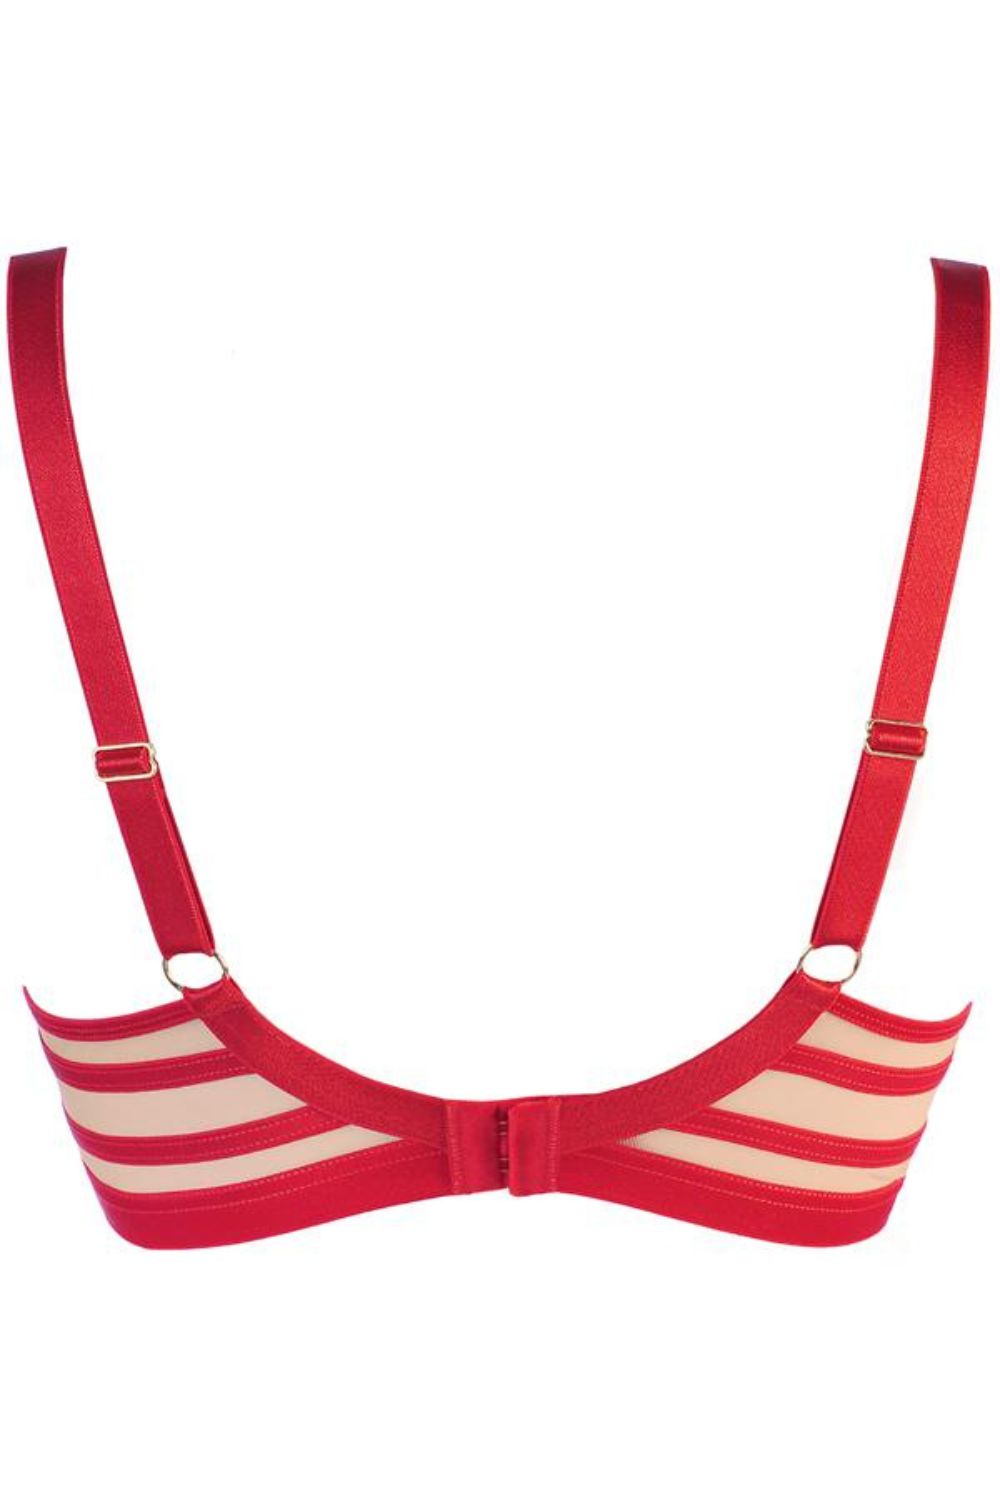 Drusilla Satin Striped Sheer Mesh Bralette - Red